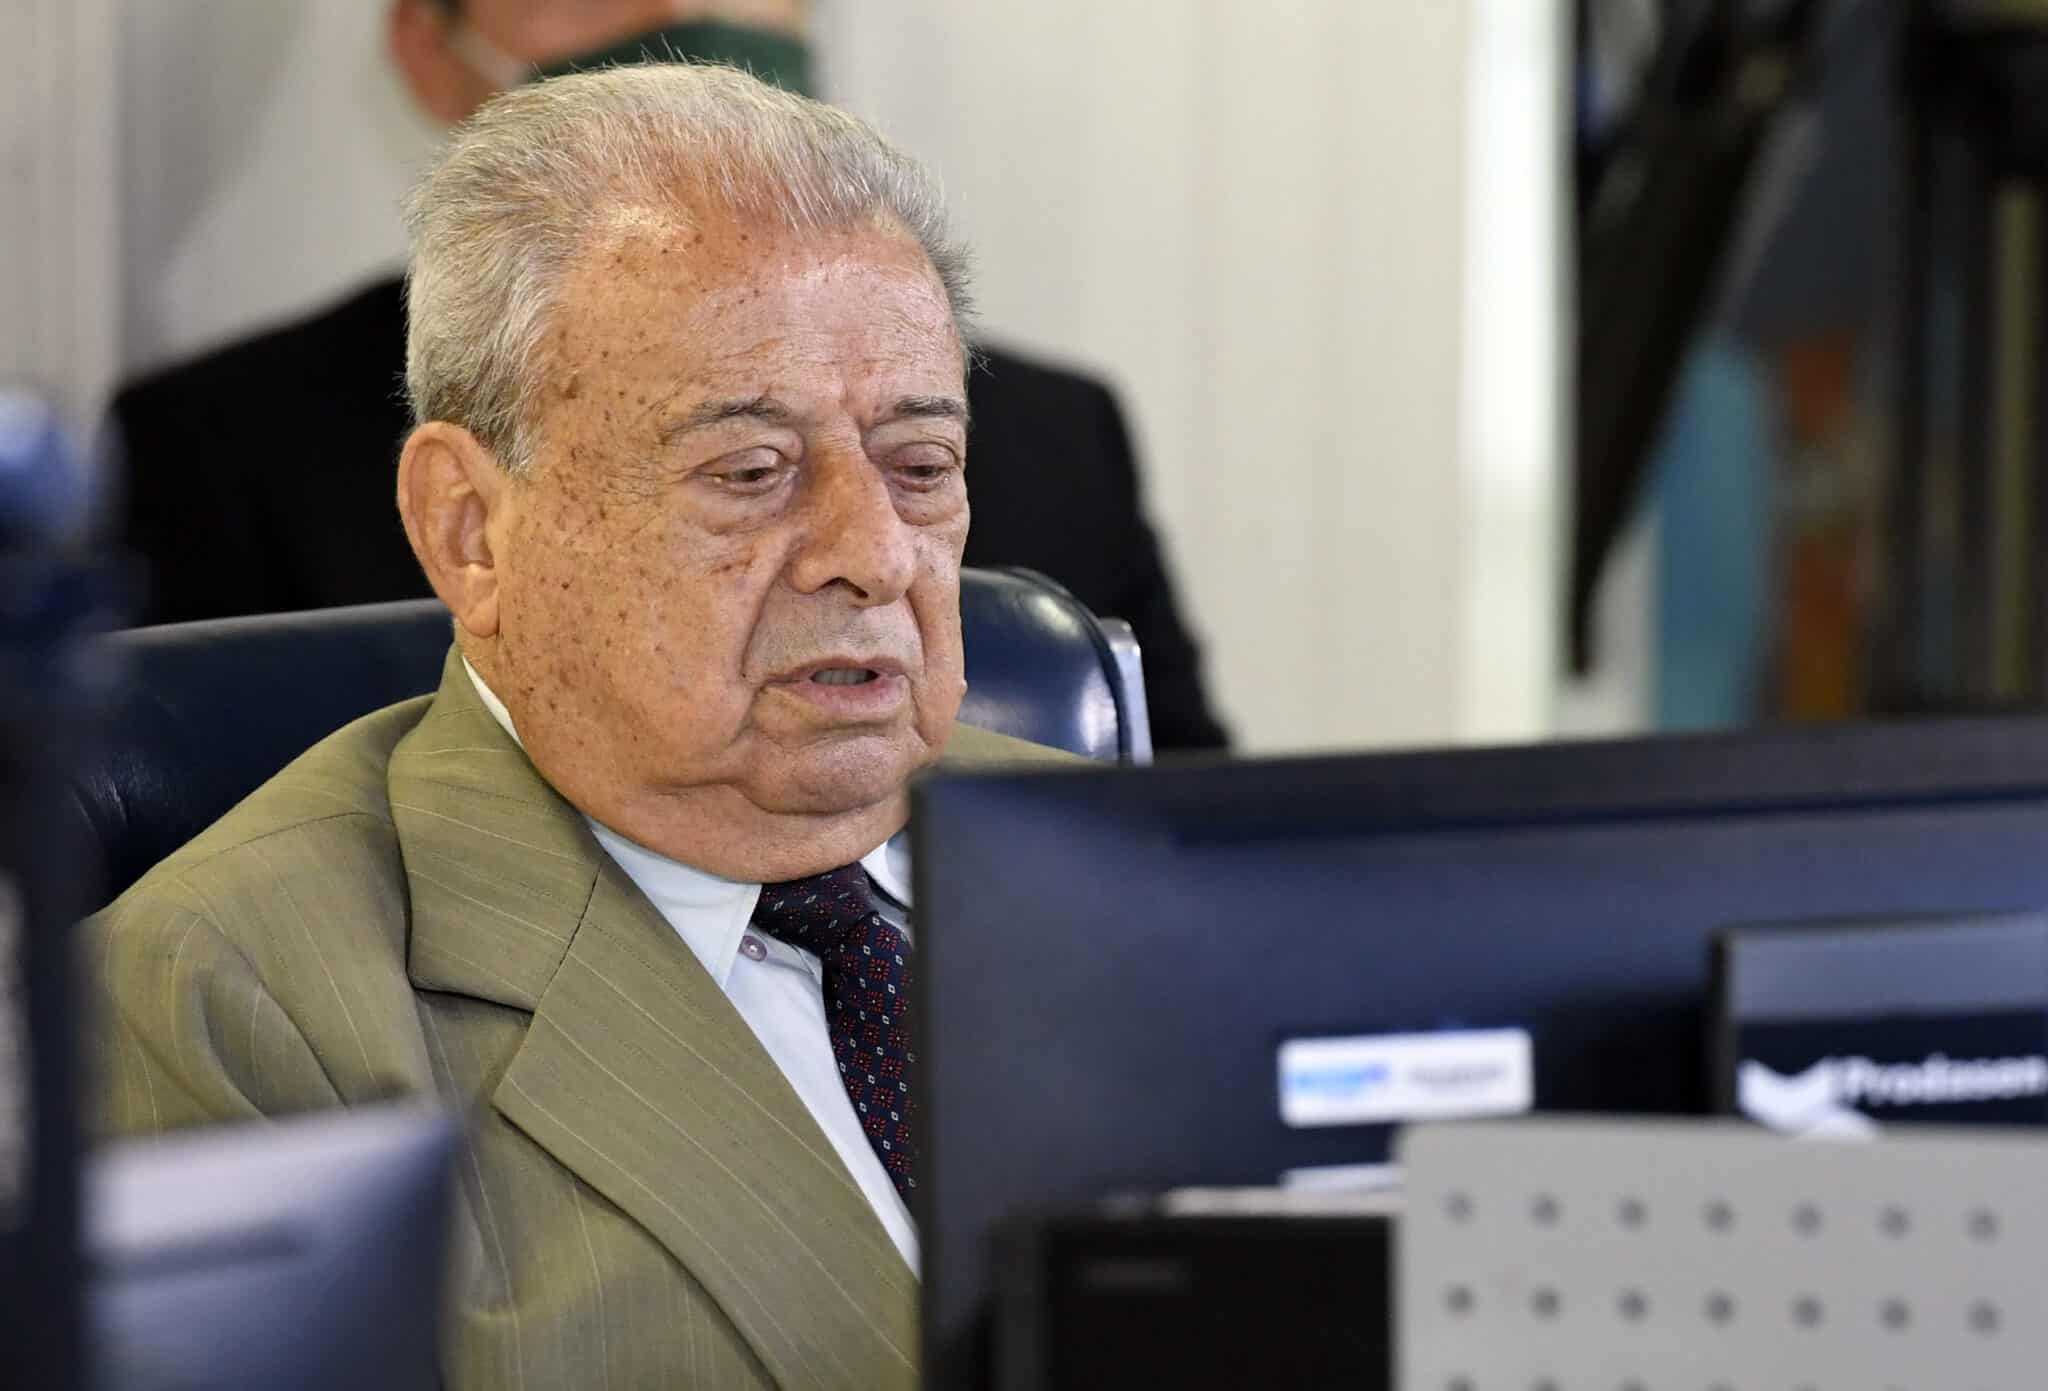 morre o ex ministro da agricultura alysson paolinelli aos 86 anos scaled